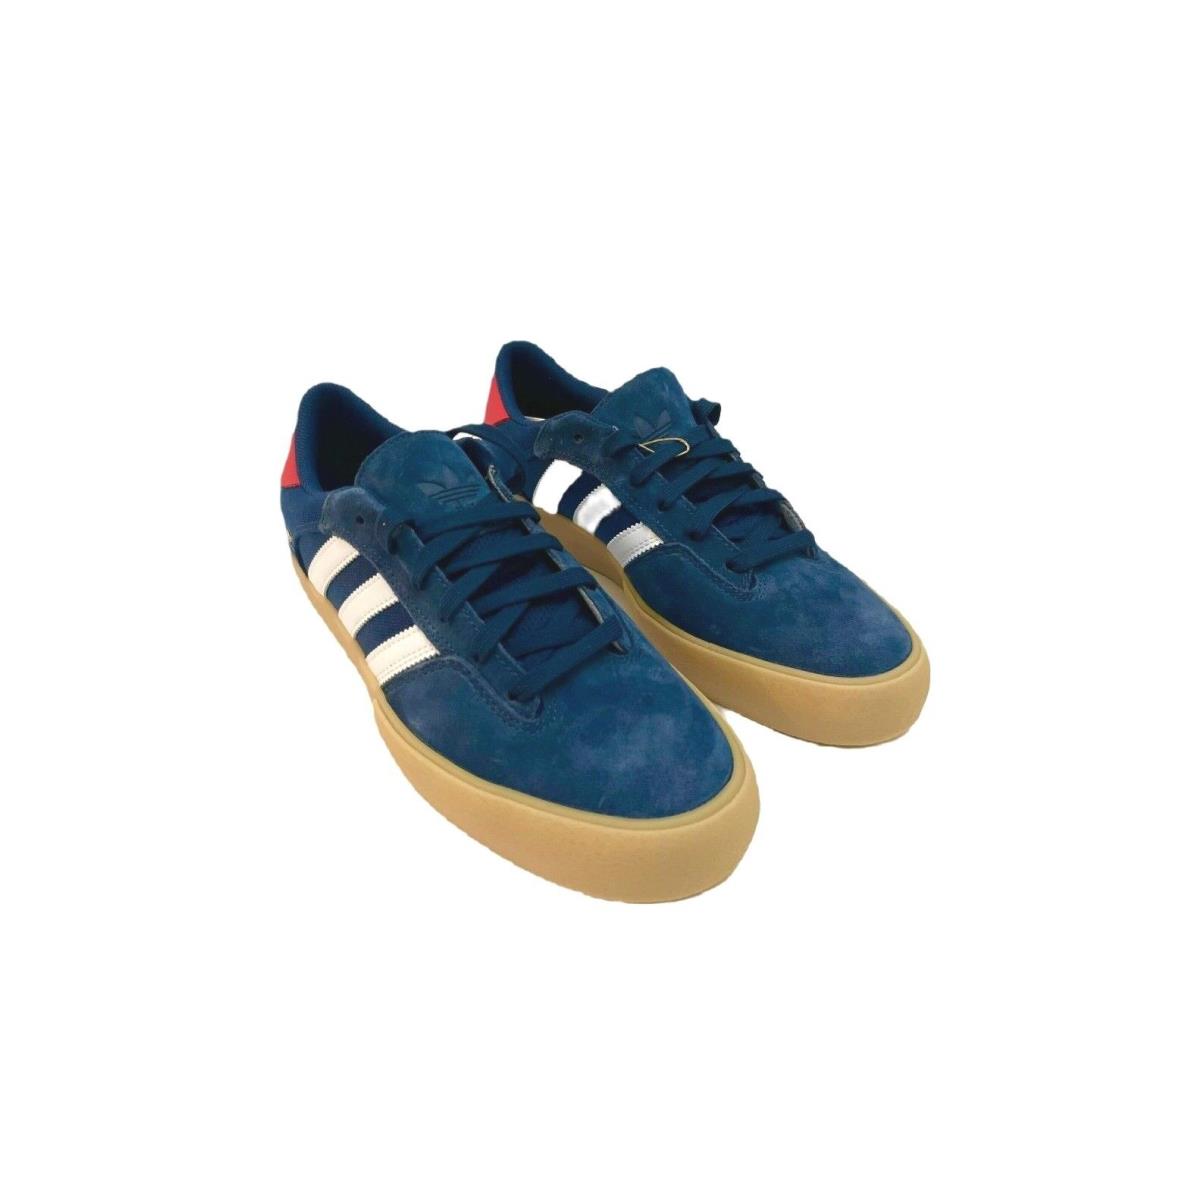 Adidas Men`s Matchbreak Super Activewear/casual Shoes - Collegiate Blue/Cloud White/Better Scarlet